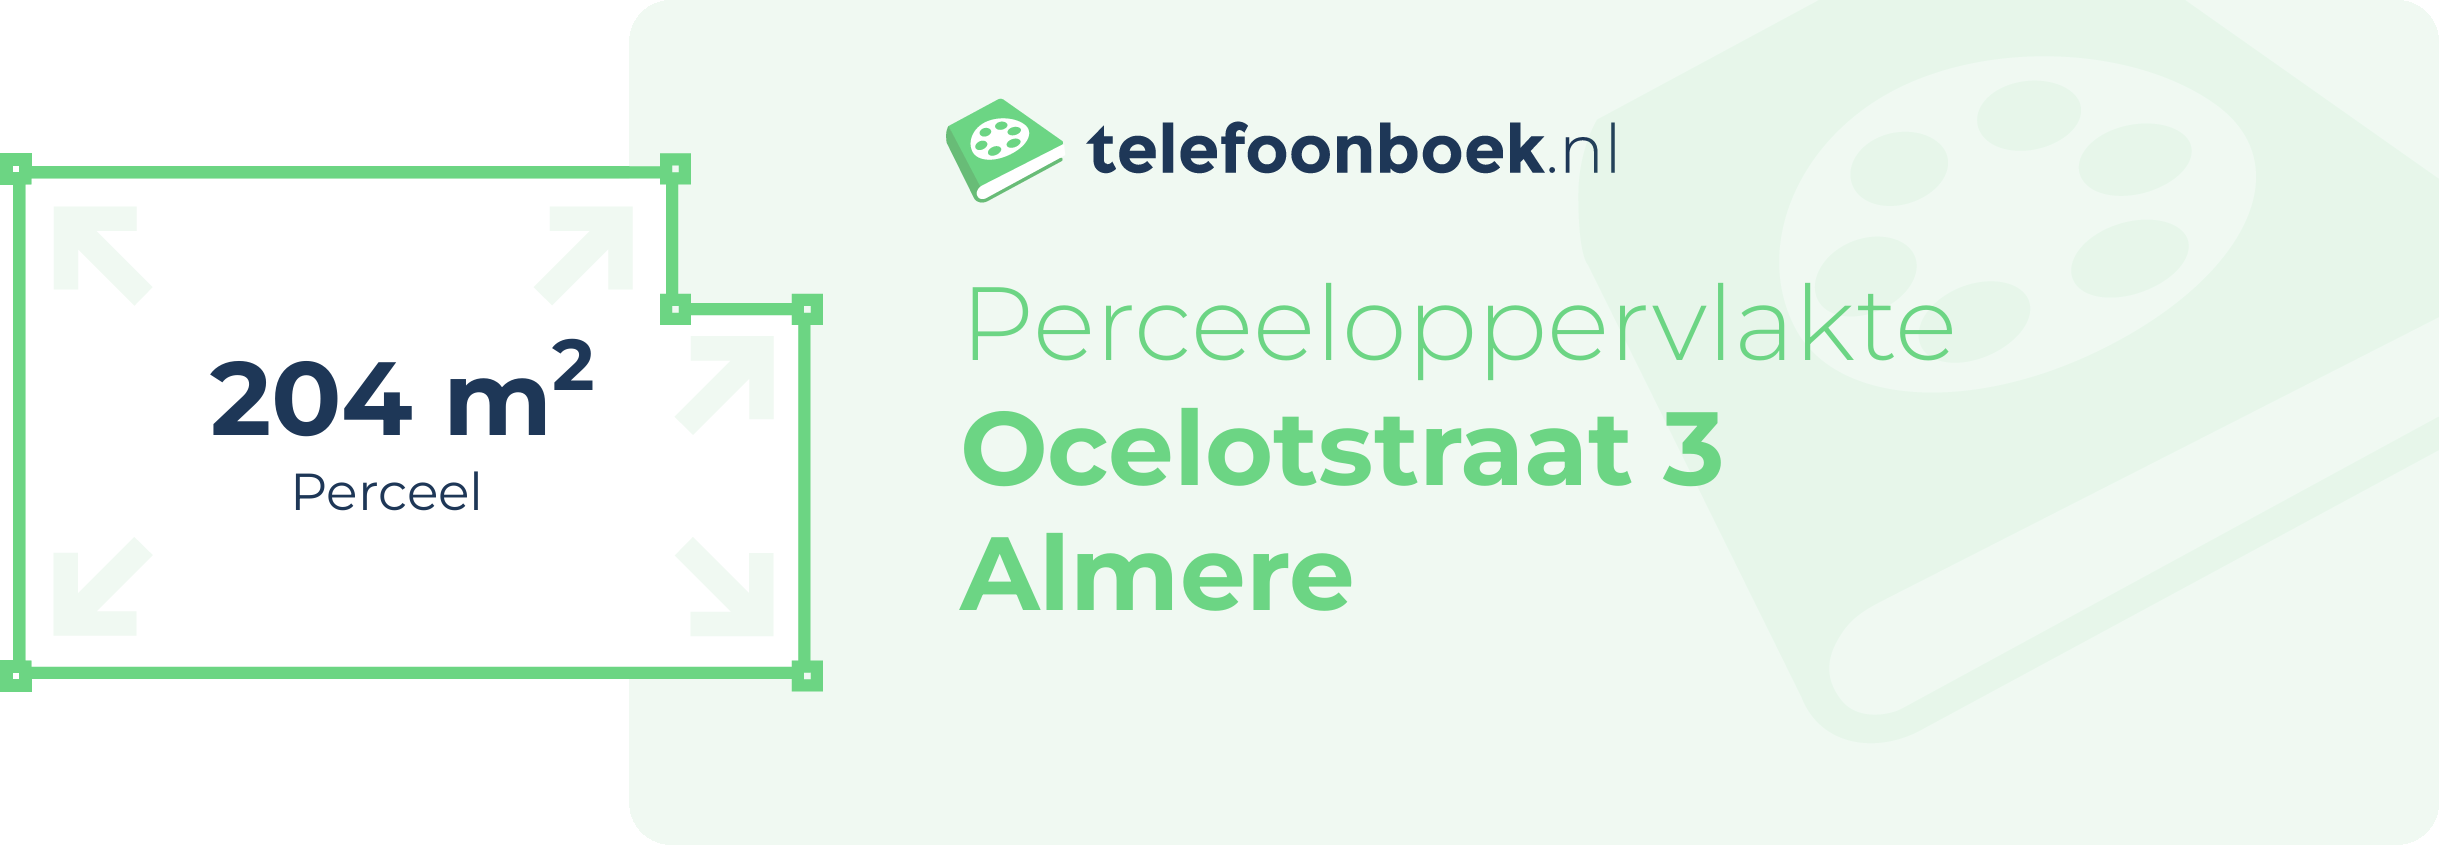 Perceeloppervlakte Ocelotstraat 3 Almere